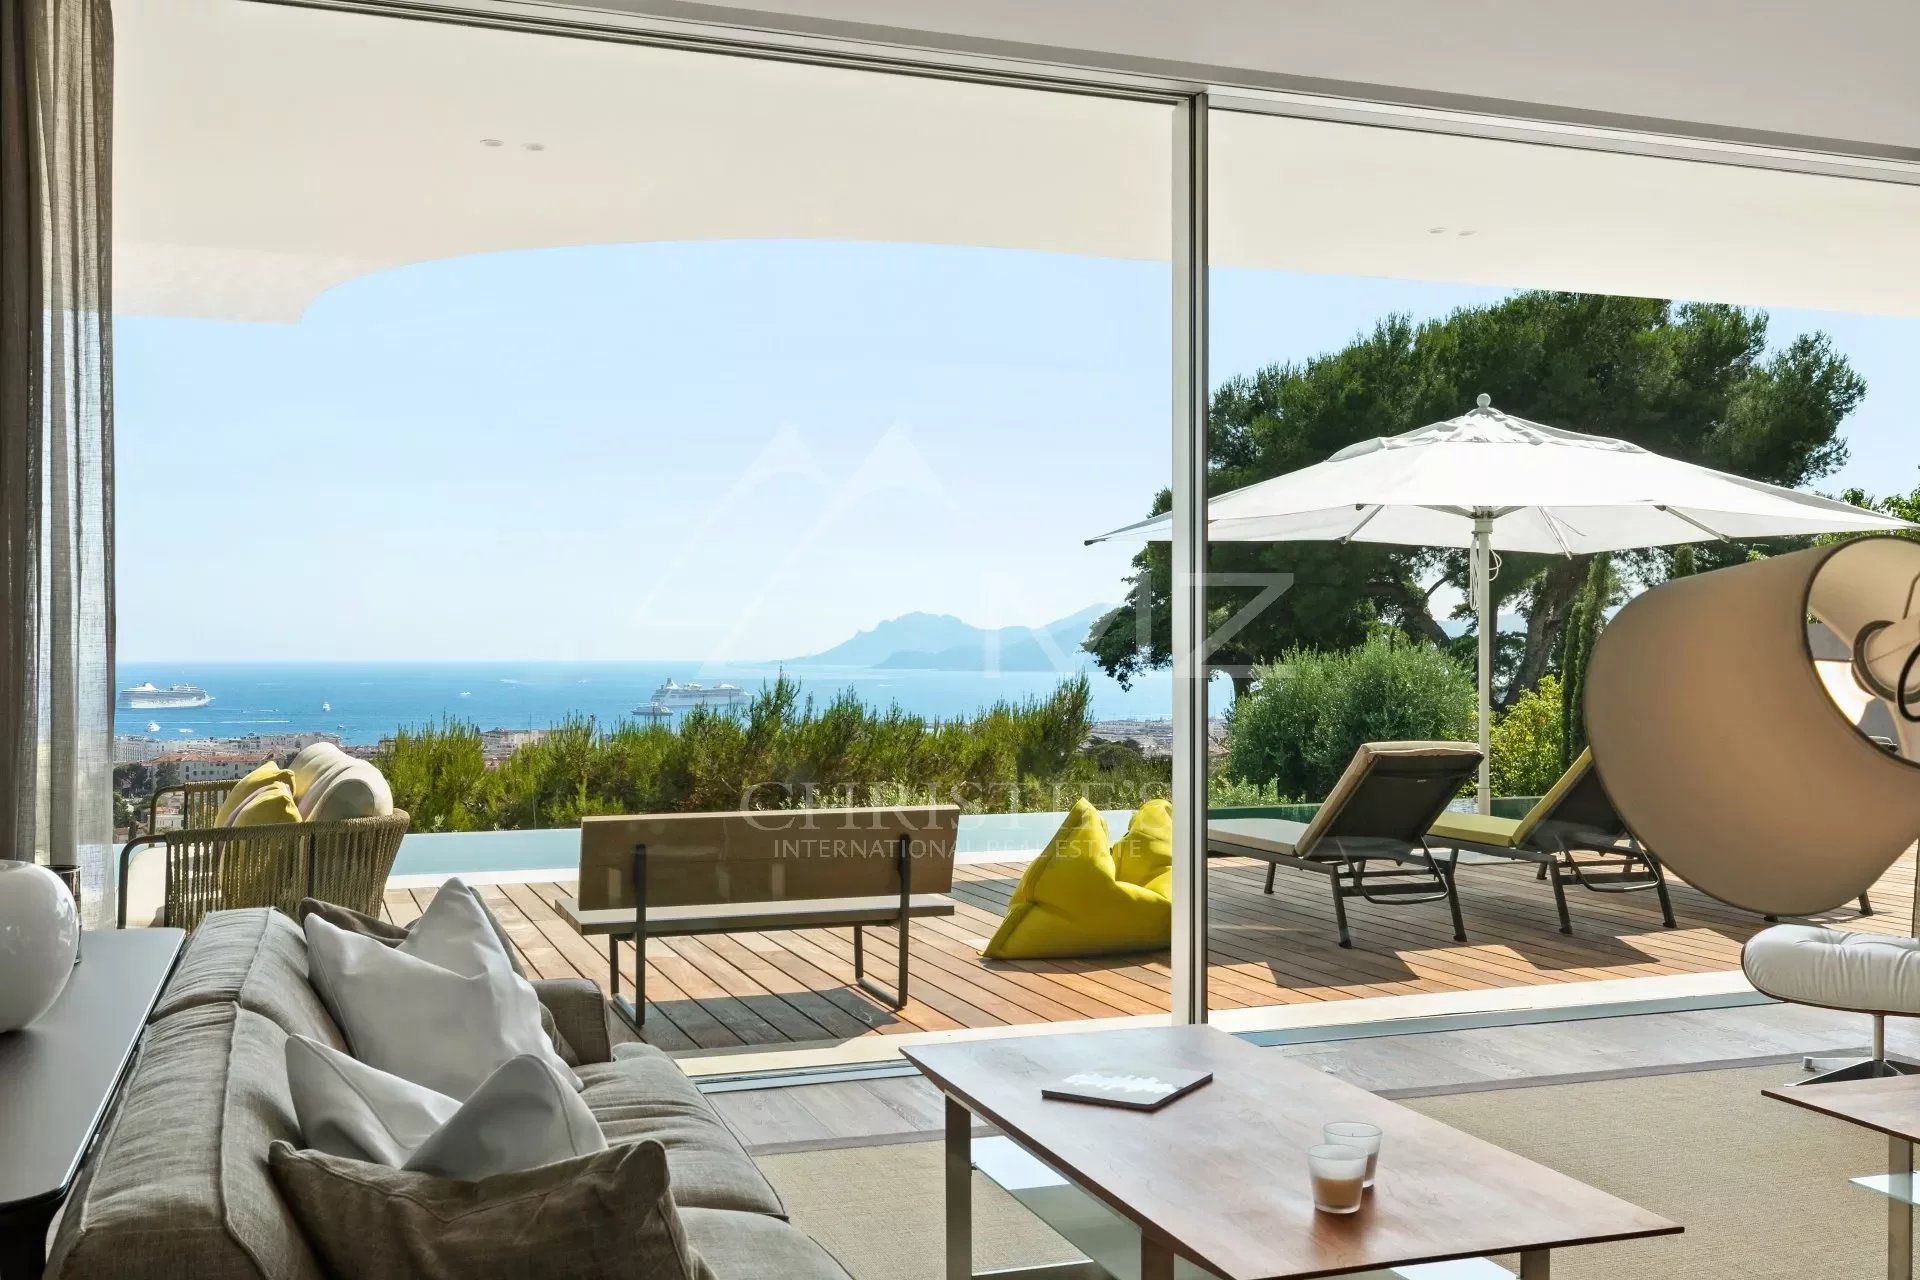 Cannes Californie - Superbe villa neuve